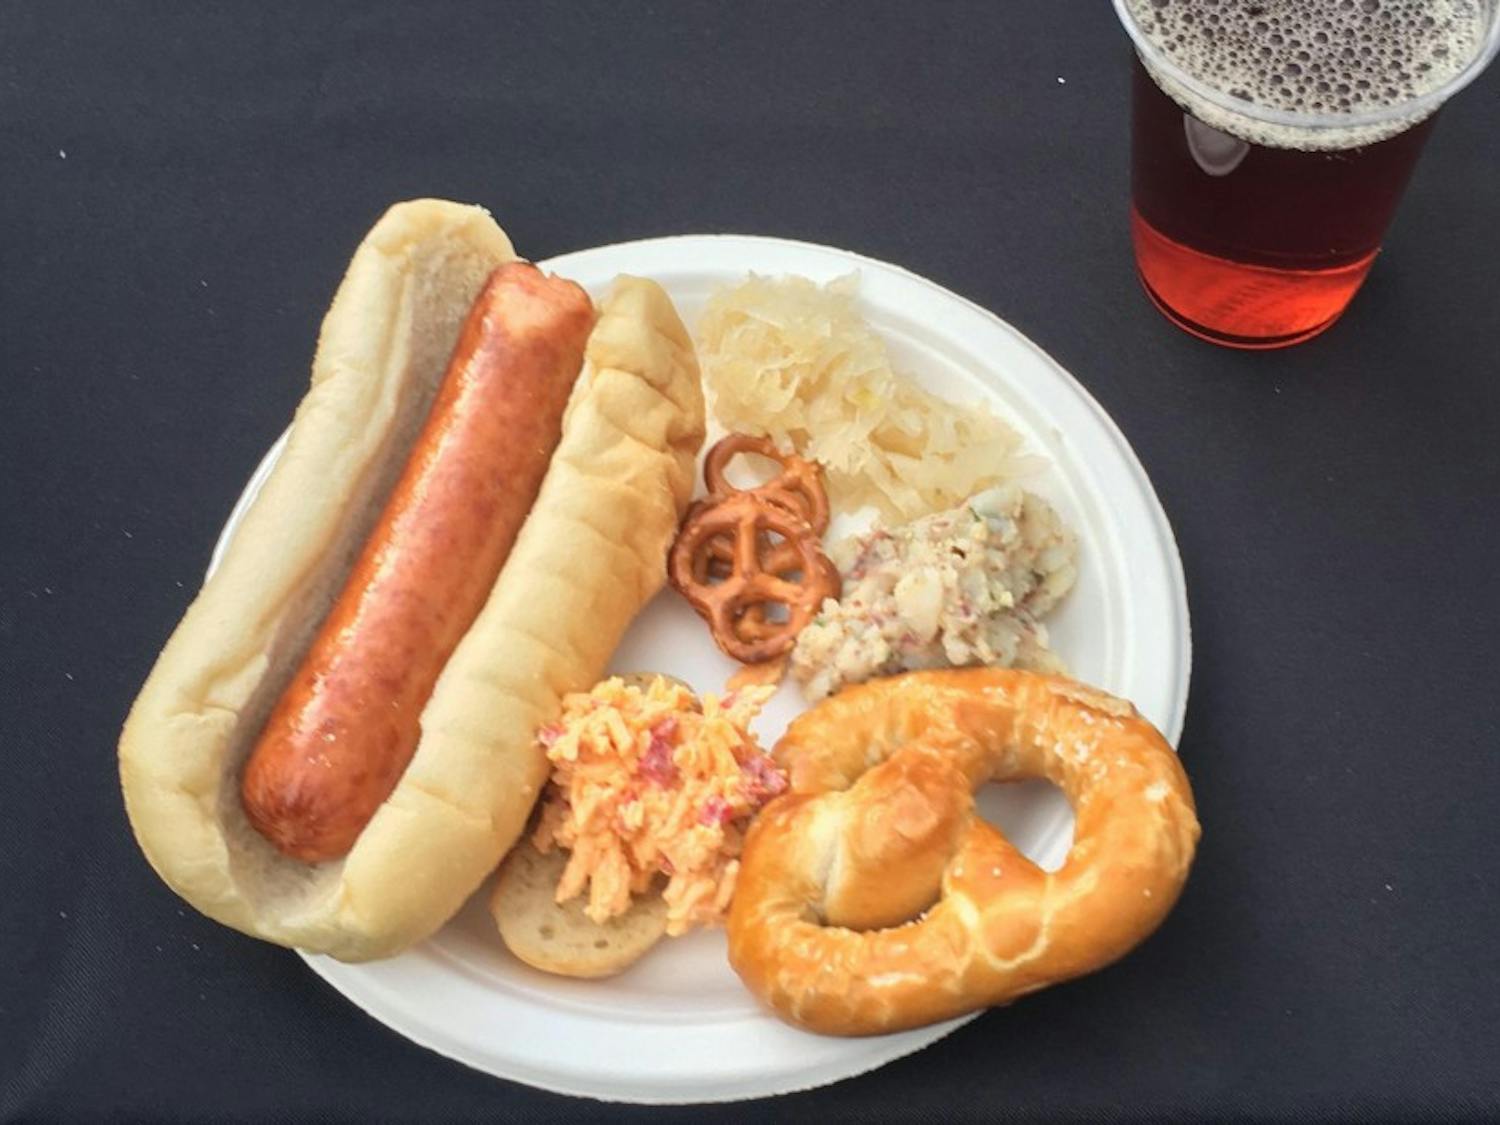 A plate with Polish sausage, sauerkraut, Obazda and pretzels.
